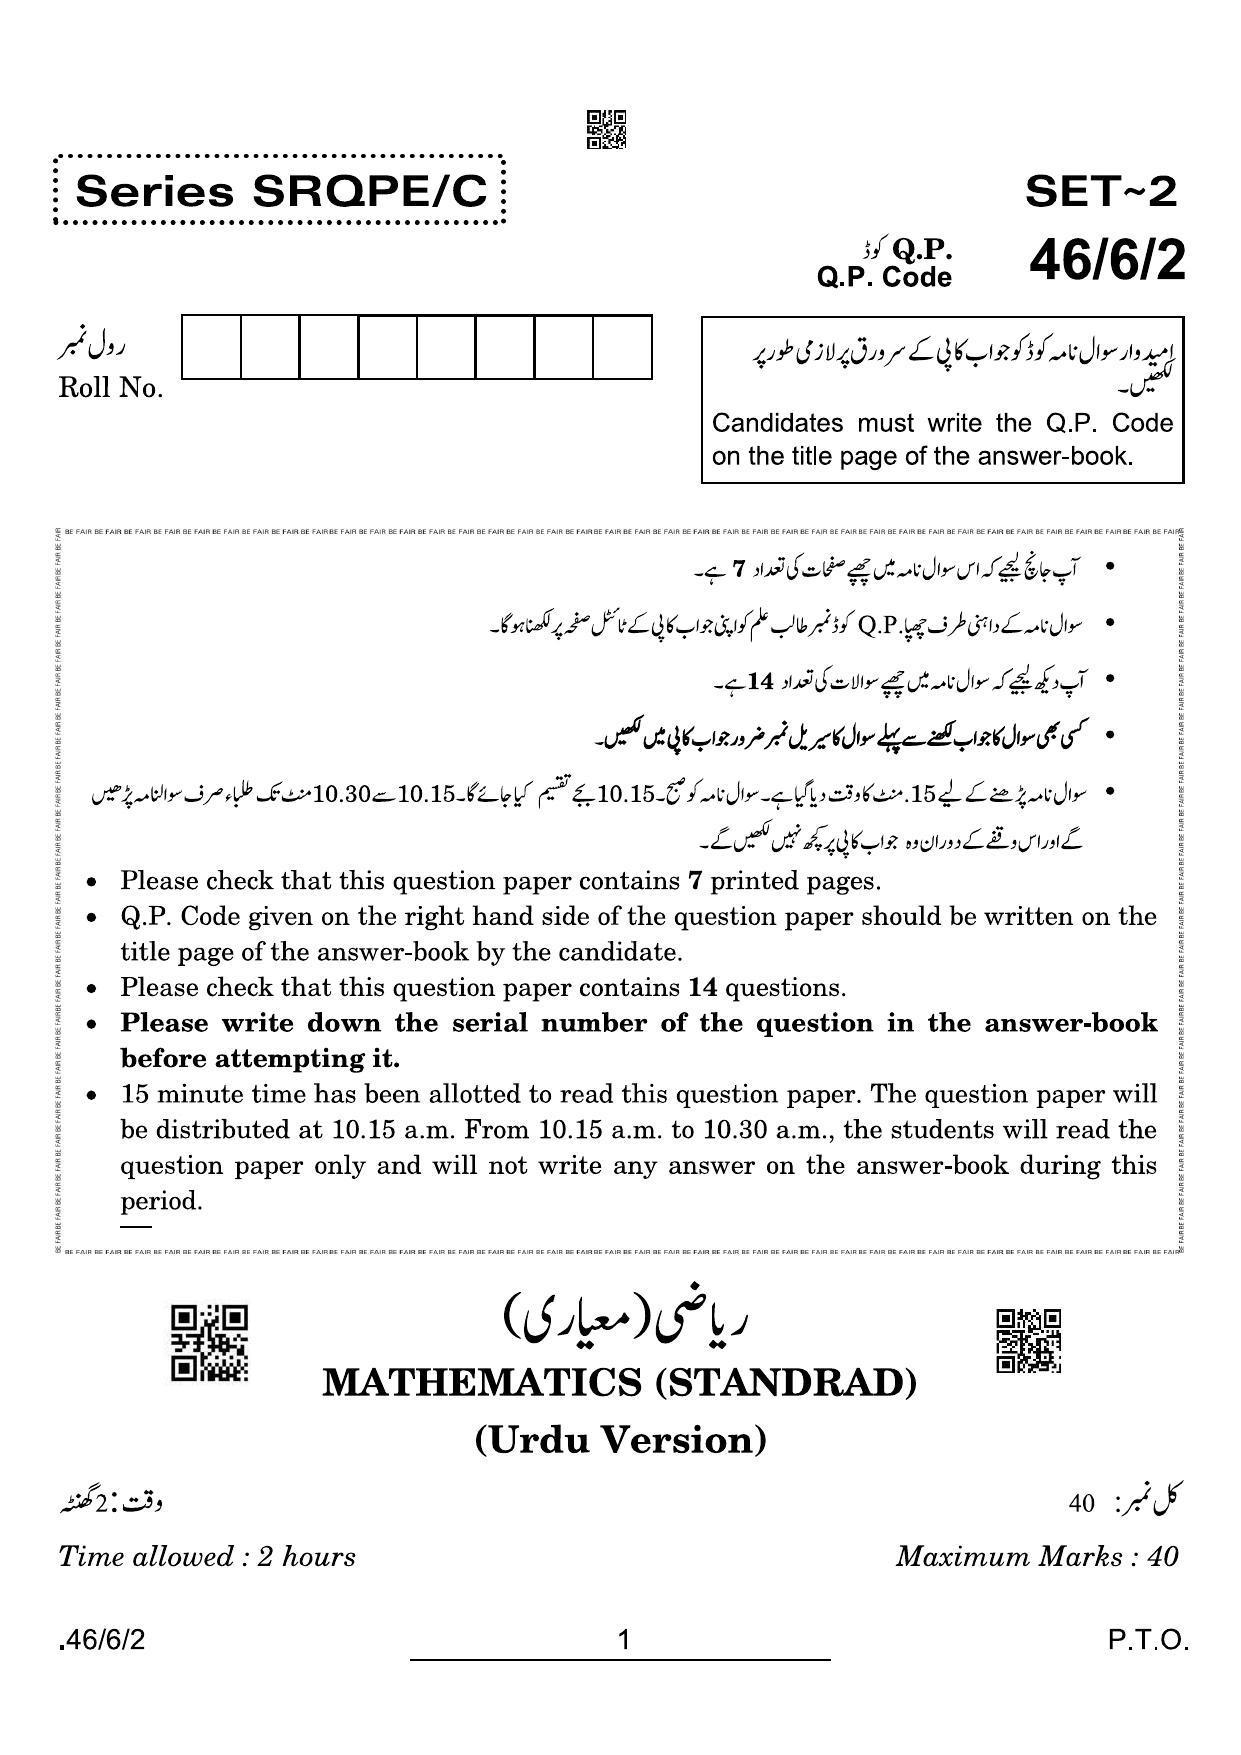 CBSE Class 10 46-6-2 Maths Standard Urdu 2022 Compartment Question Paper - Page 1